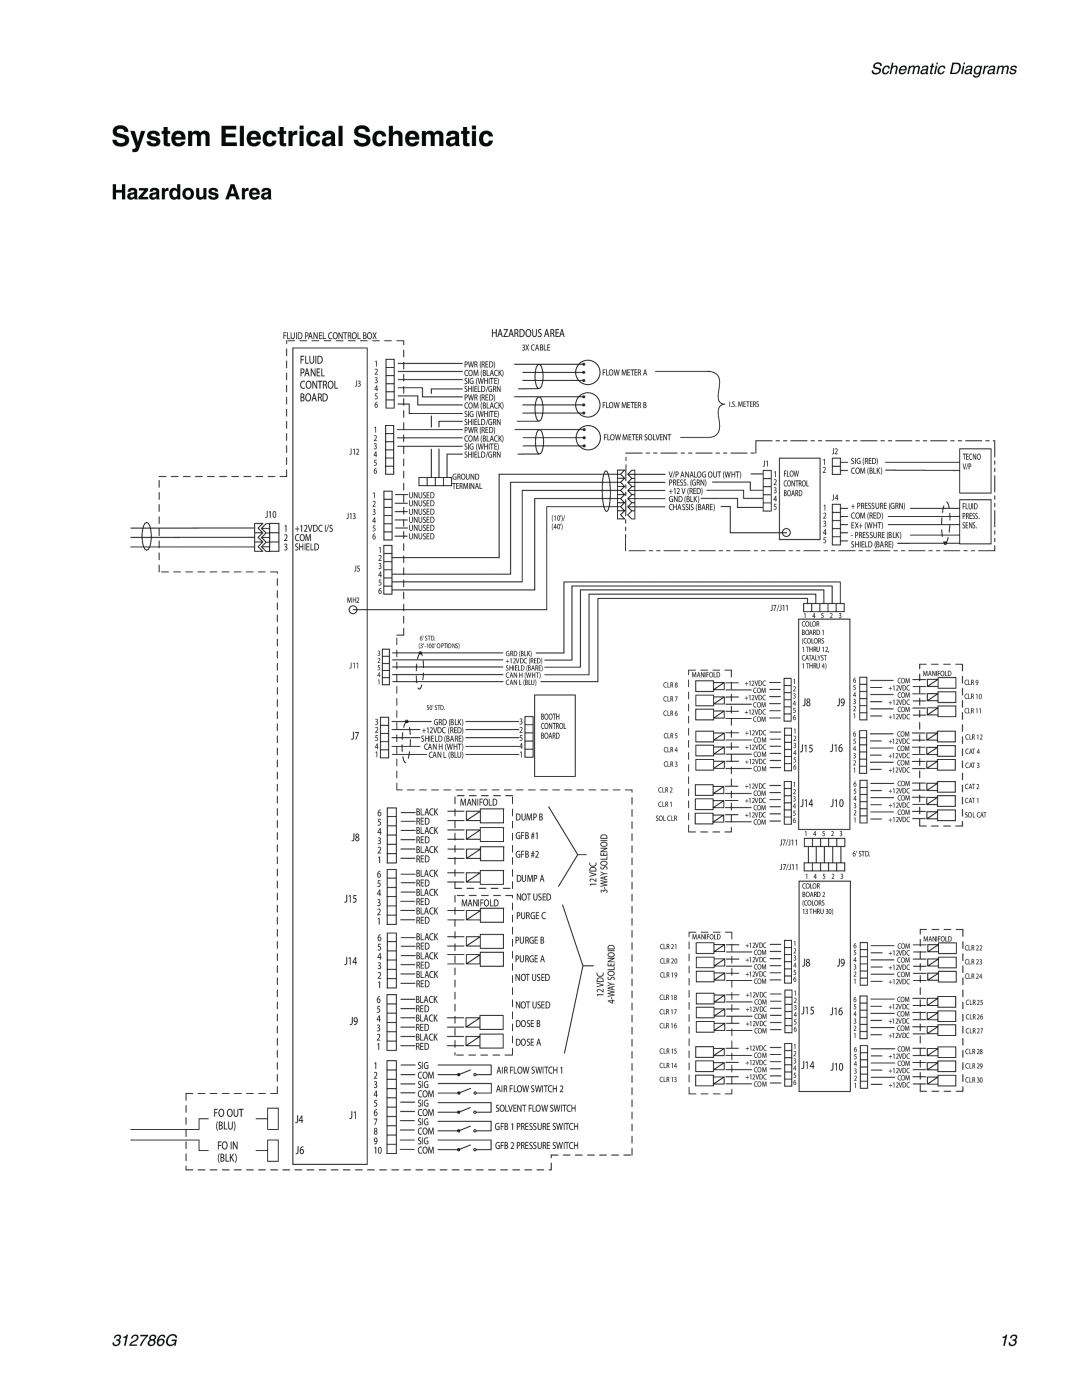 Graco TI12743a, TI12954a System Electrical Schematic, Hazardous Area, Schematic Diagrams, 312786G 